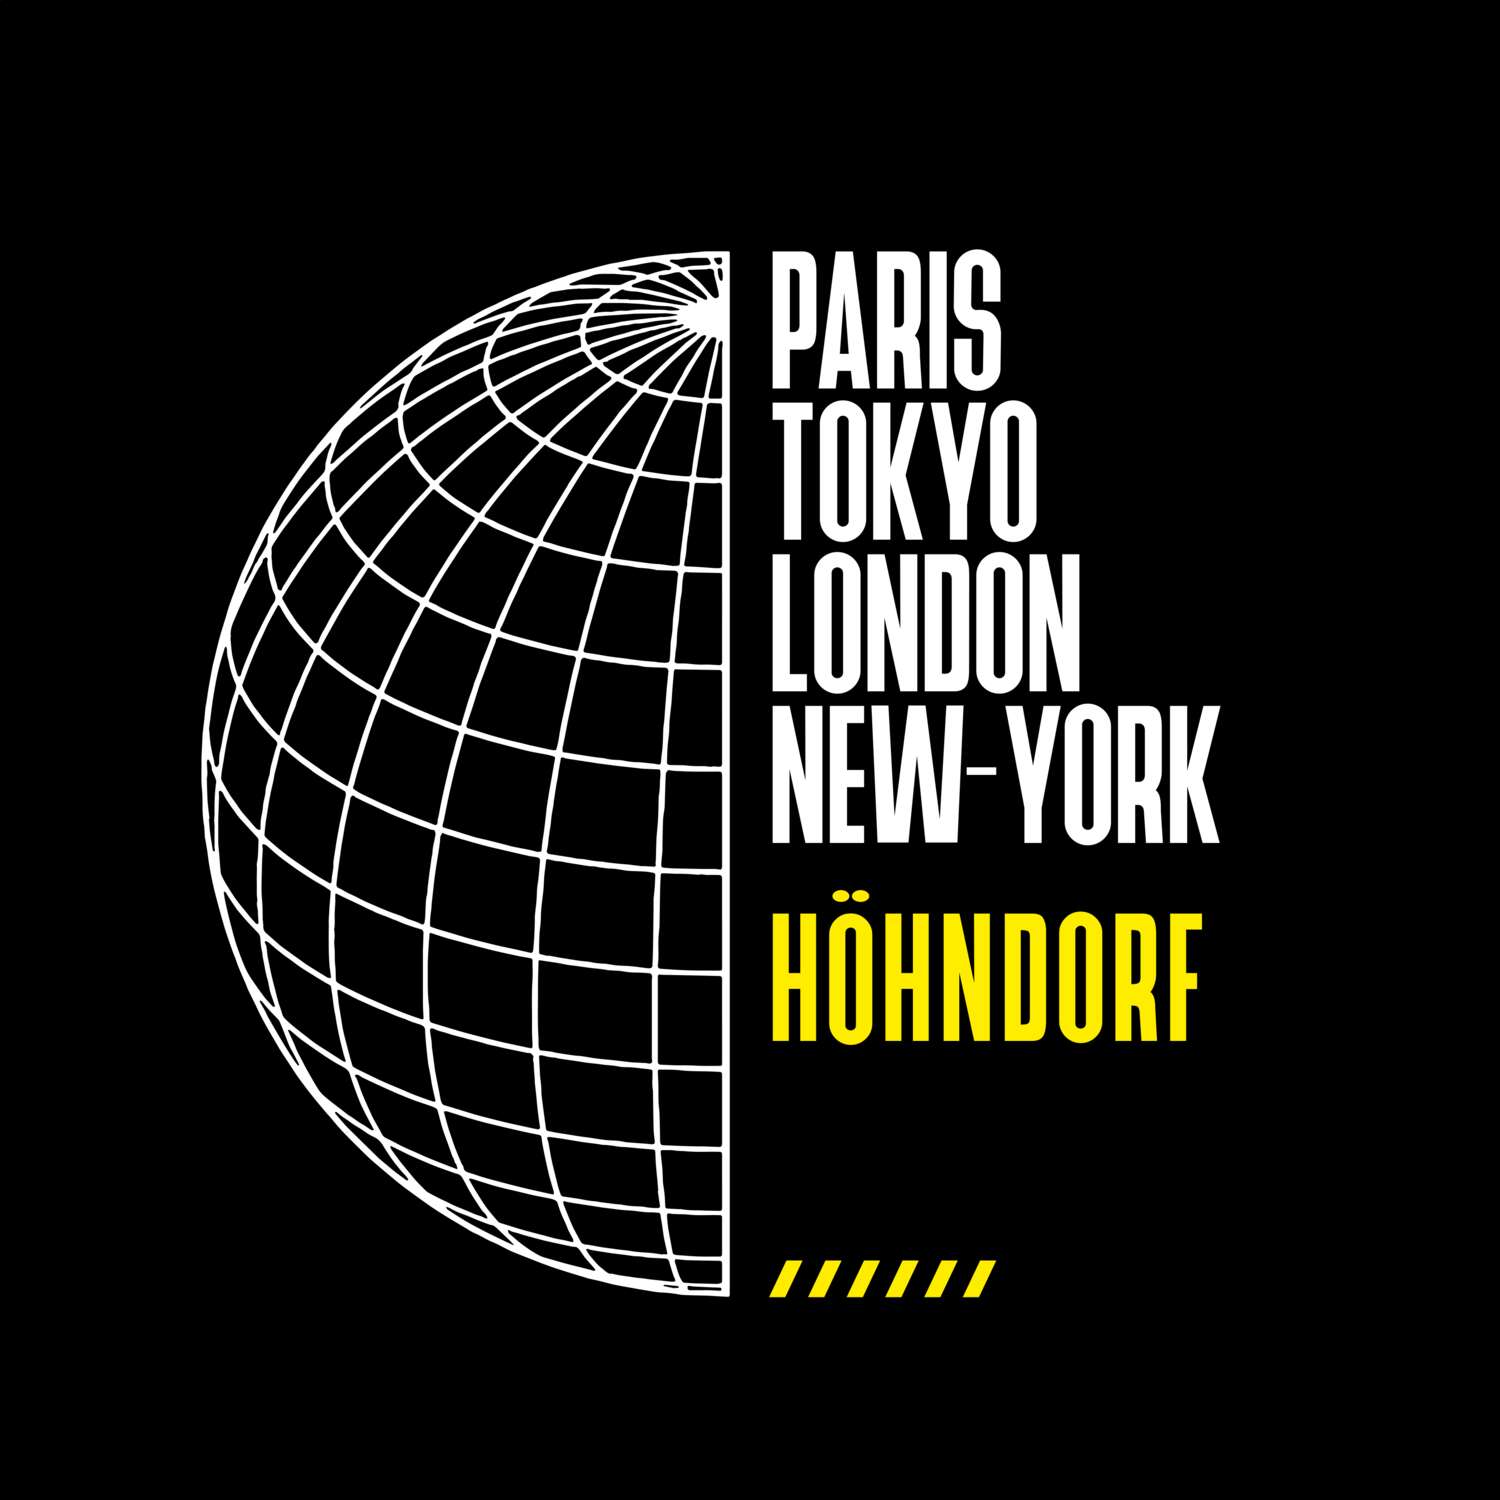 Höhndorf T-Shirt »Paris Tokyo London«